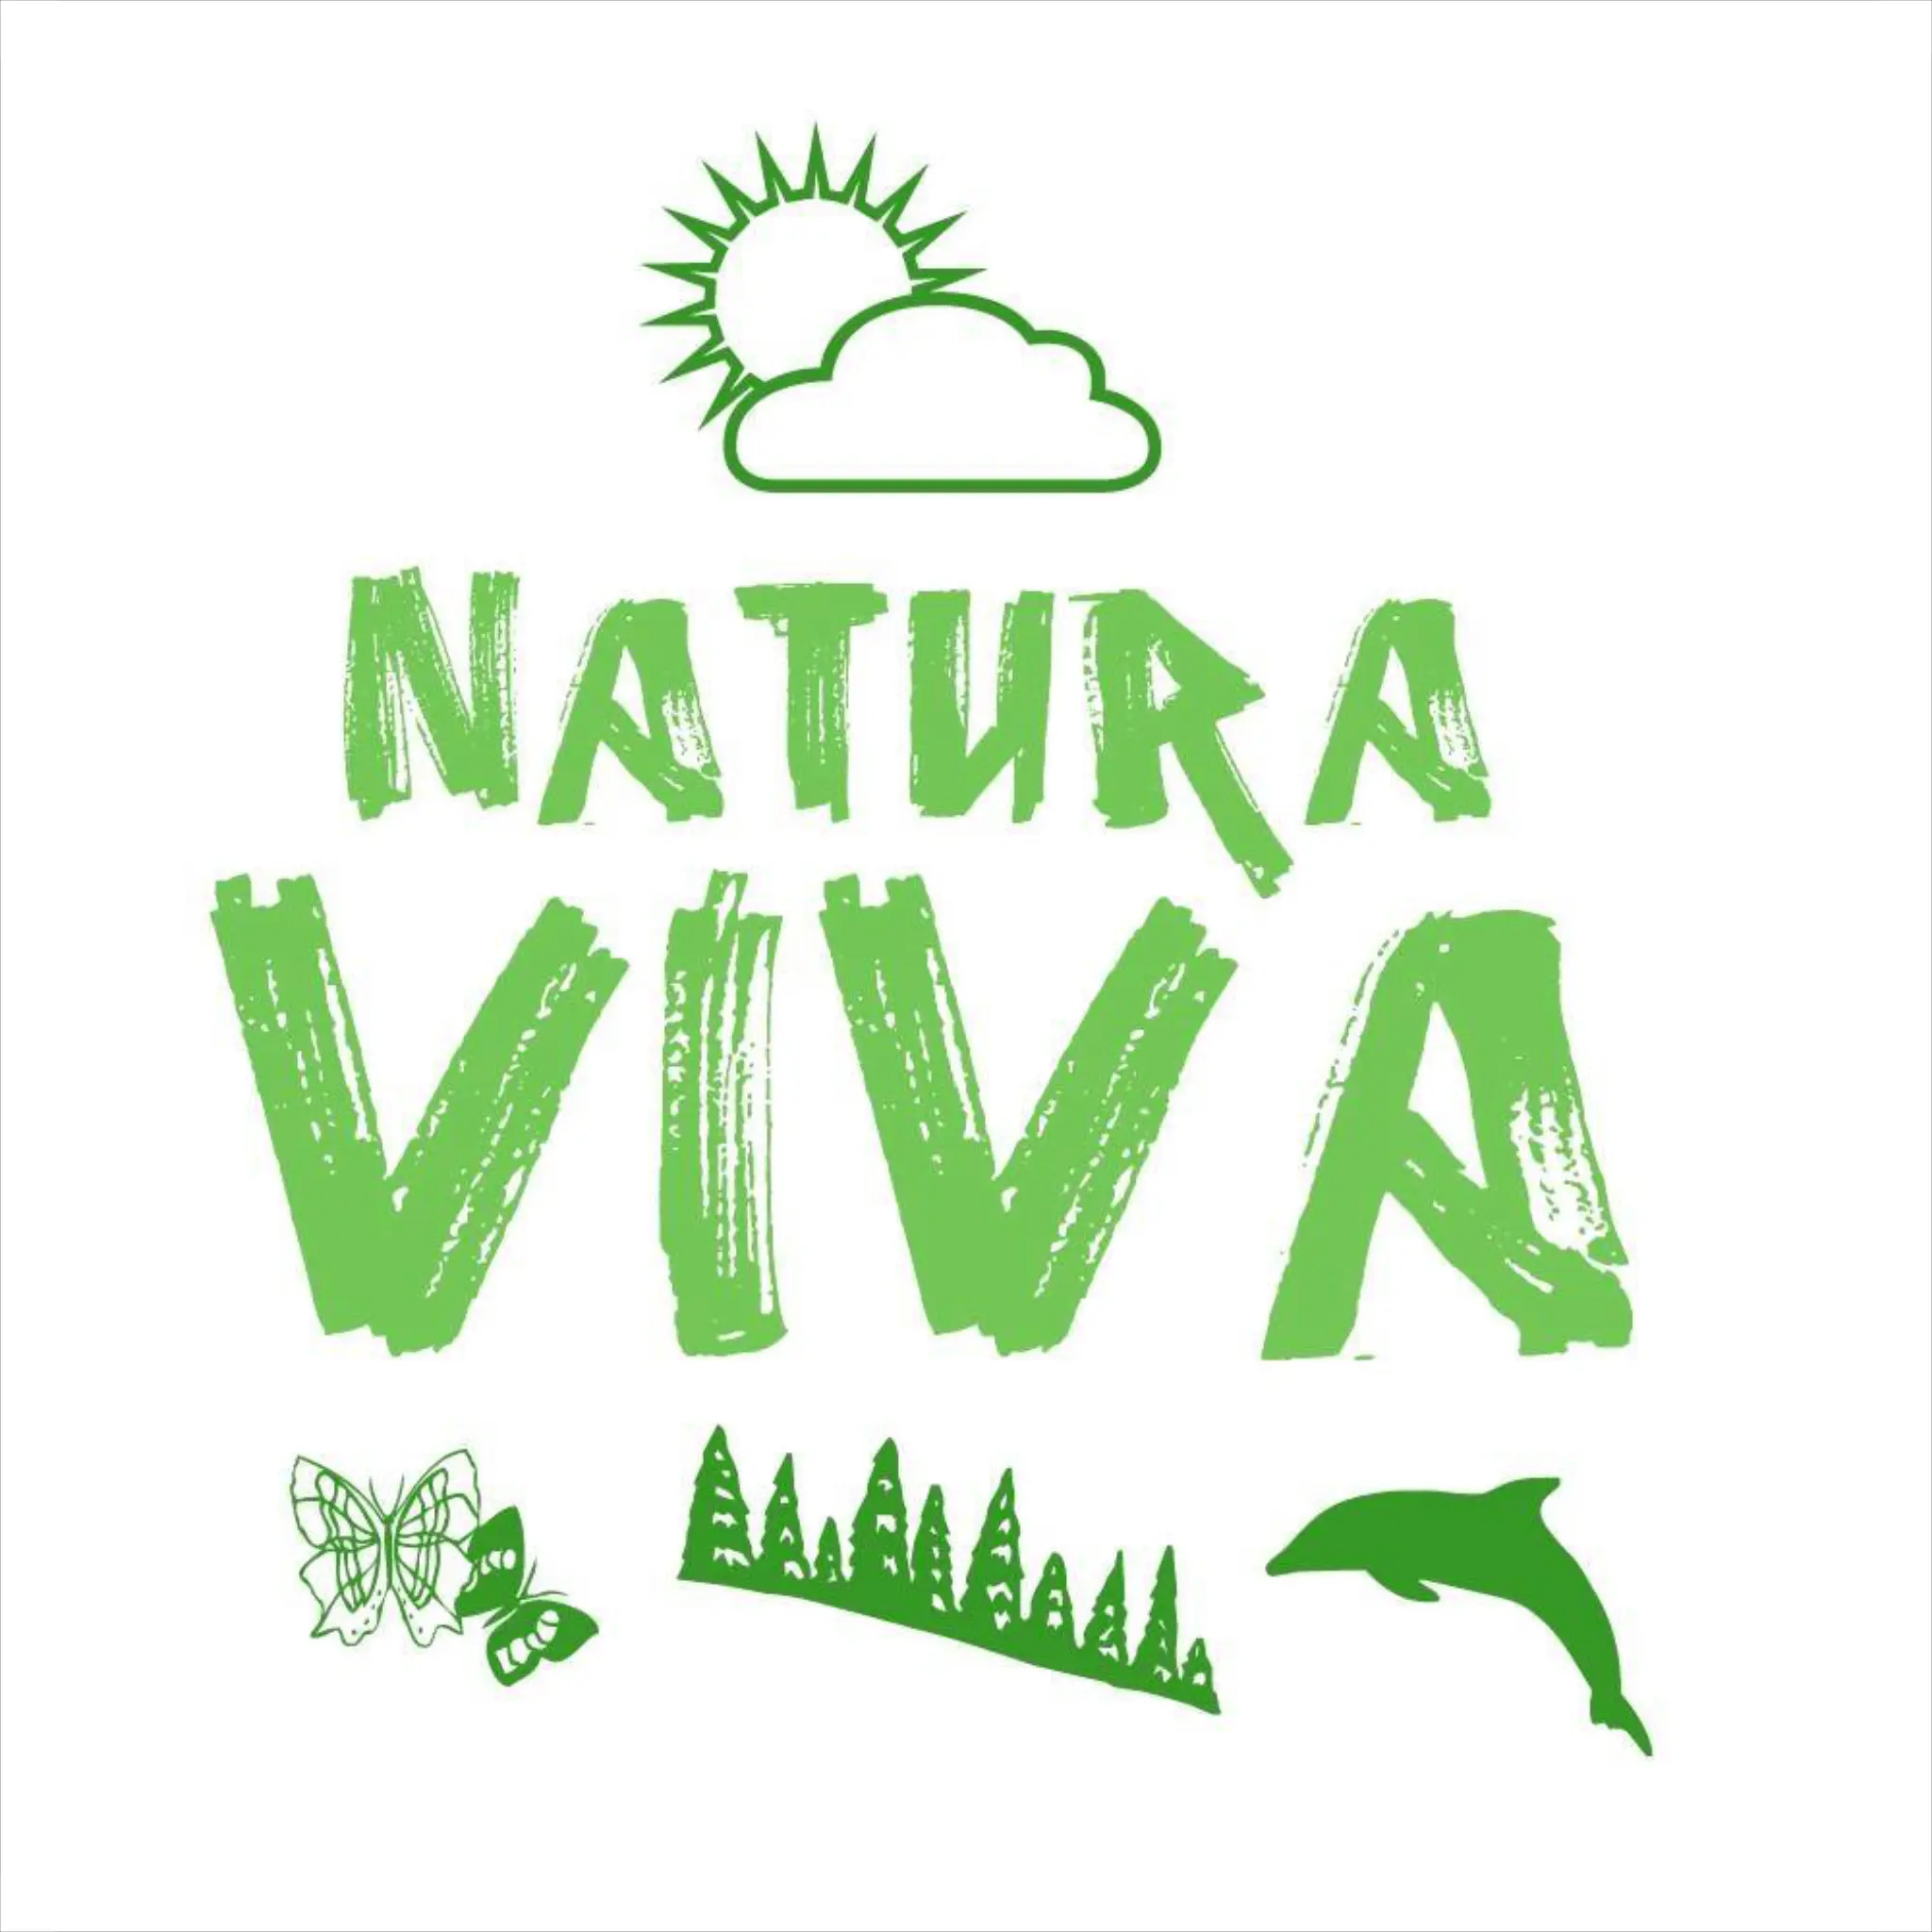 Natura Viva